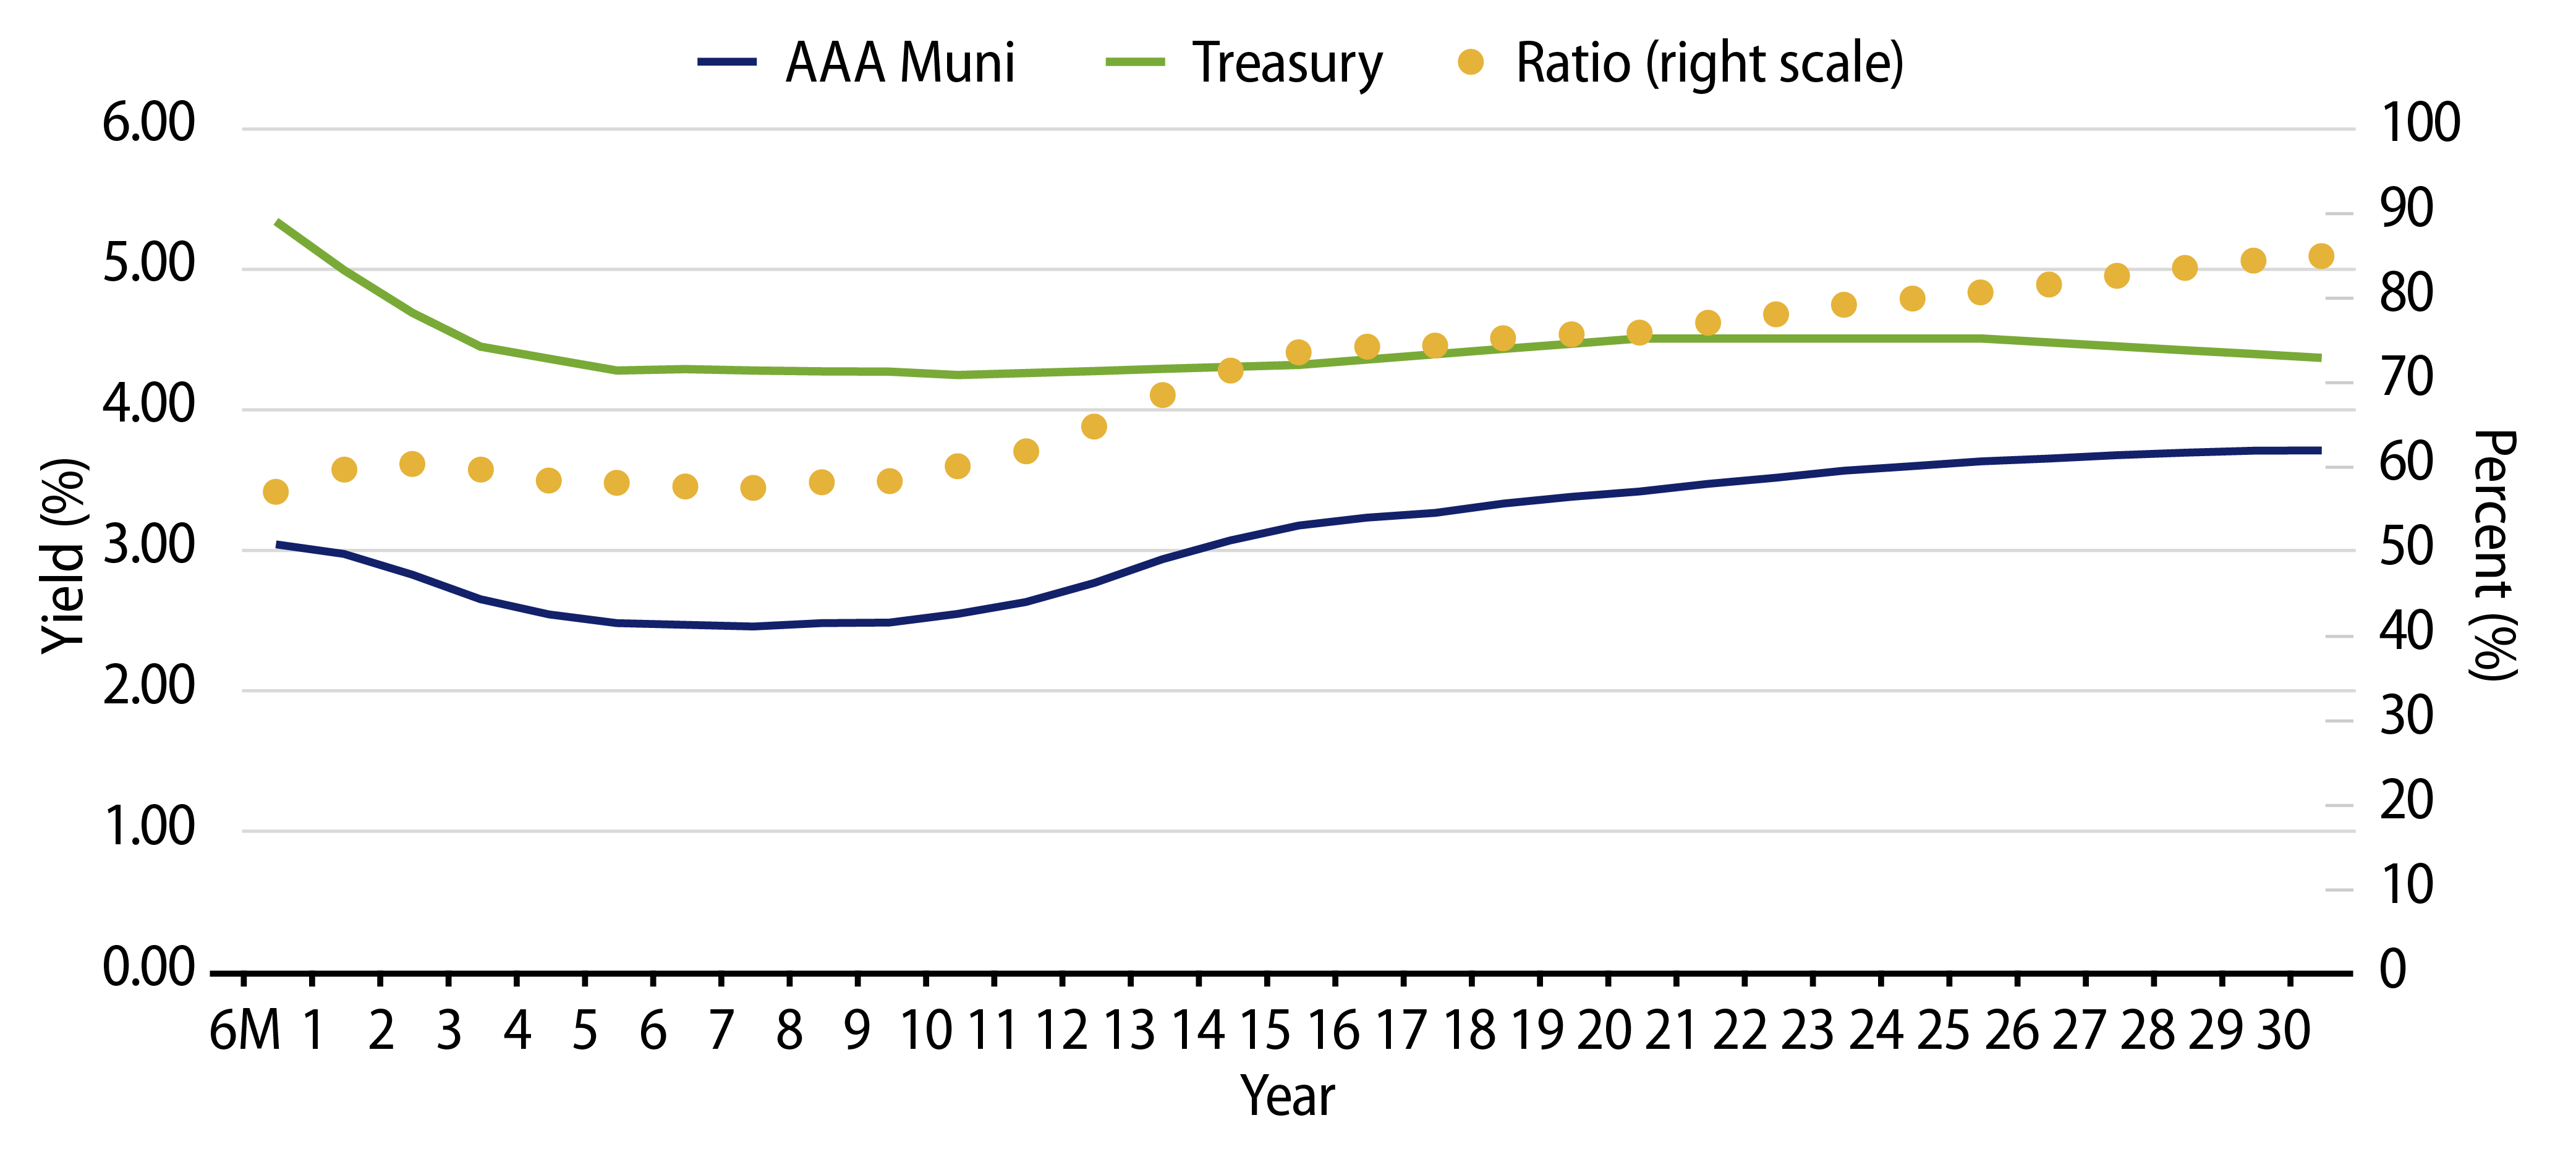  AAA Municipal vs. Treasury Yield Curves